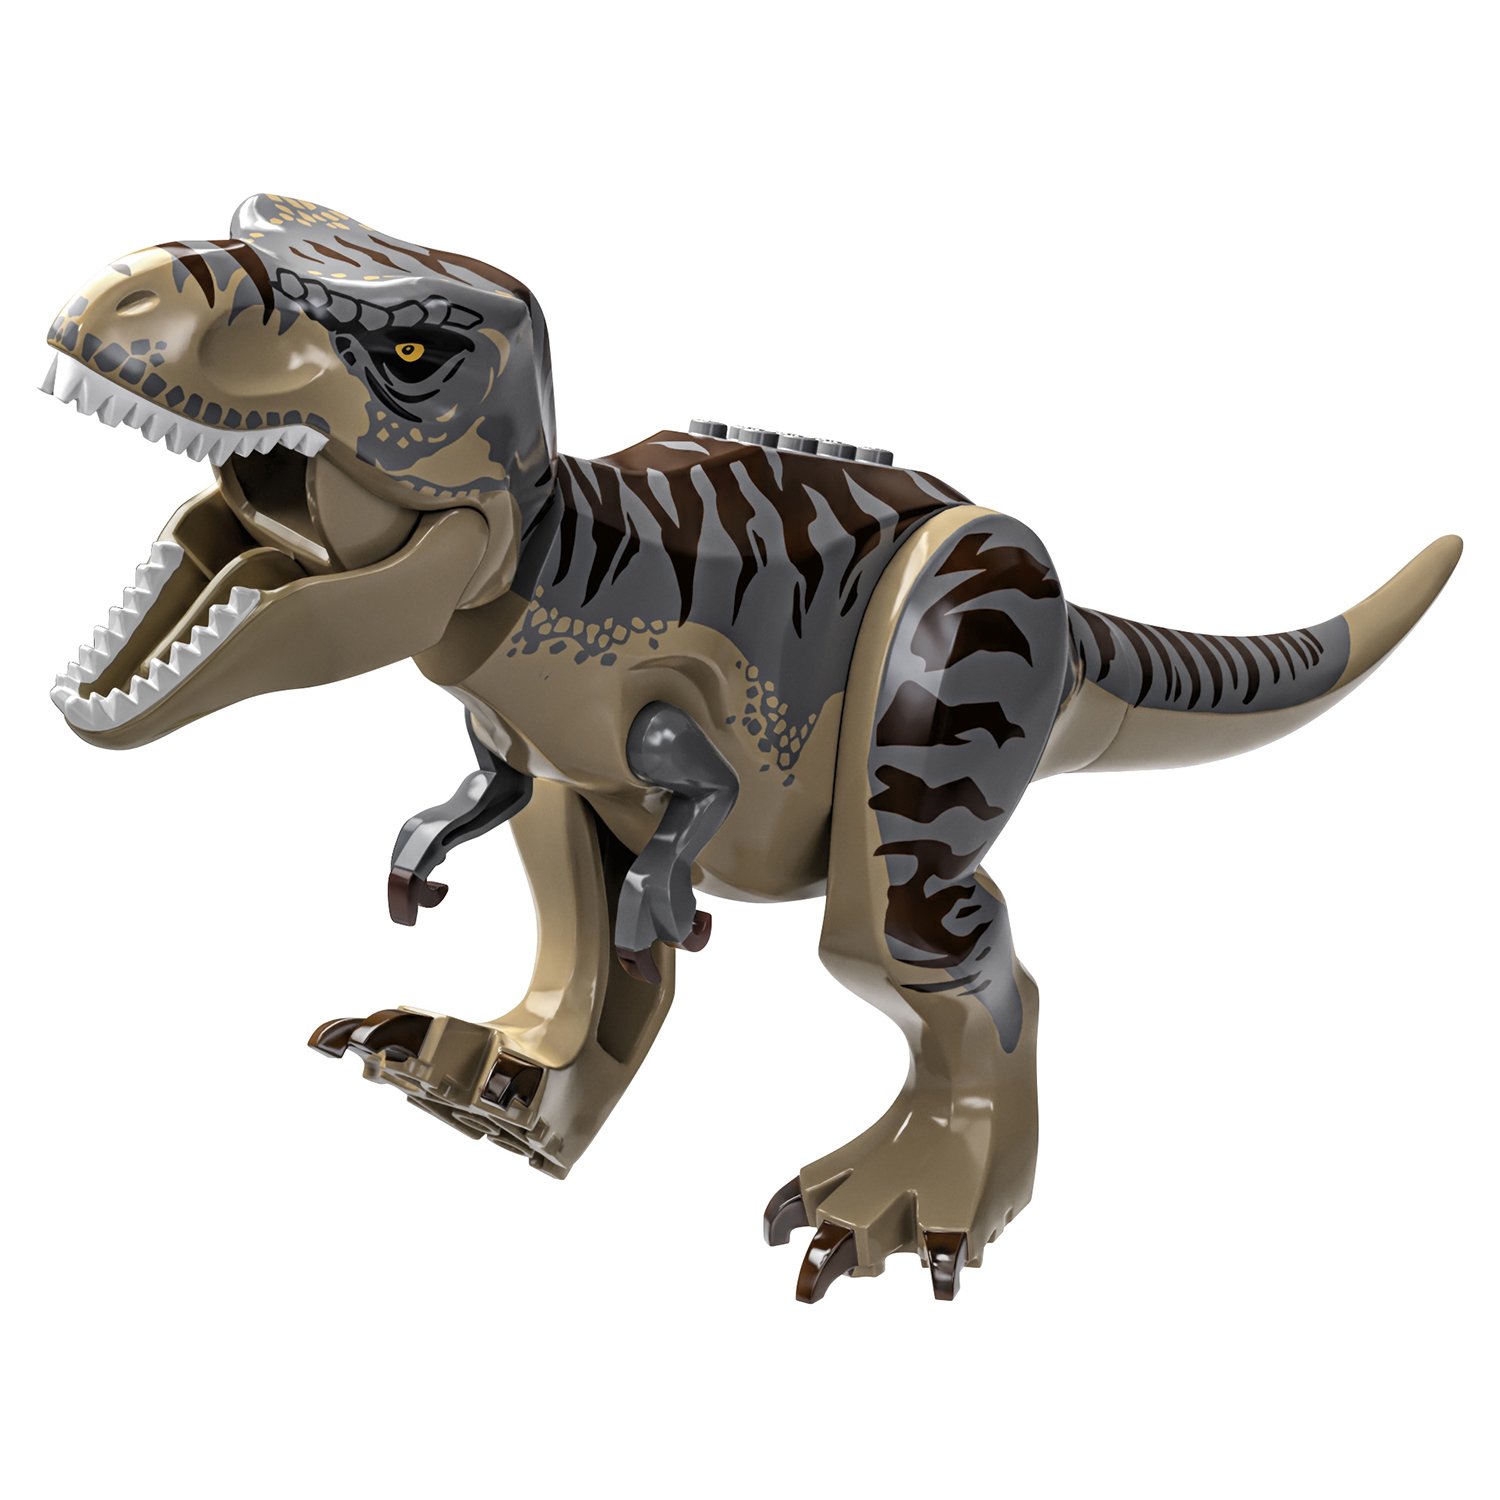 Lego Jurassic World 75938 Бой тираннозавра и робота-динозавра